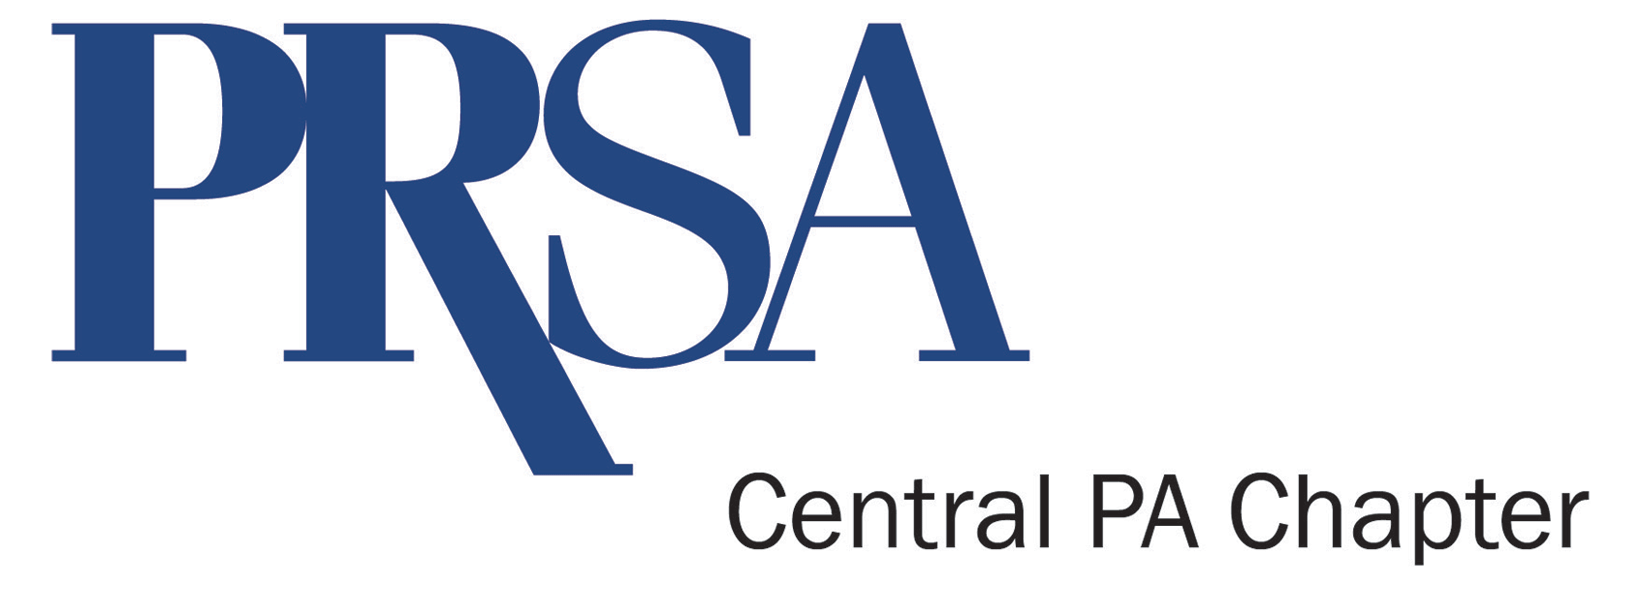 PRSA Central PA Chapter